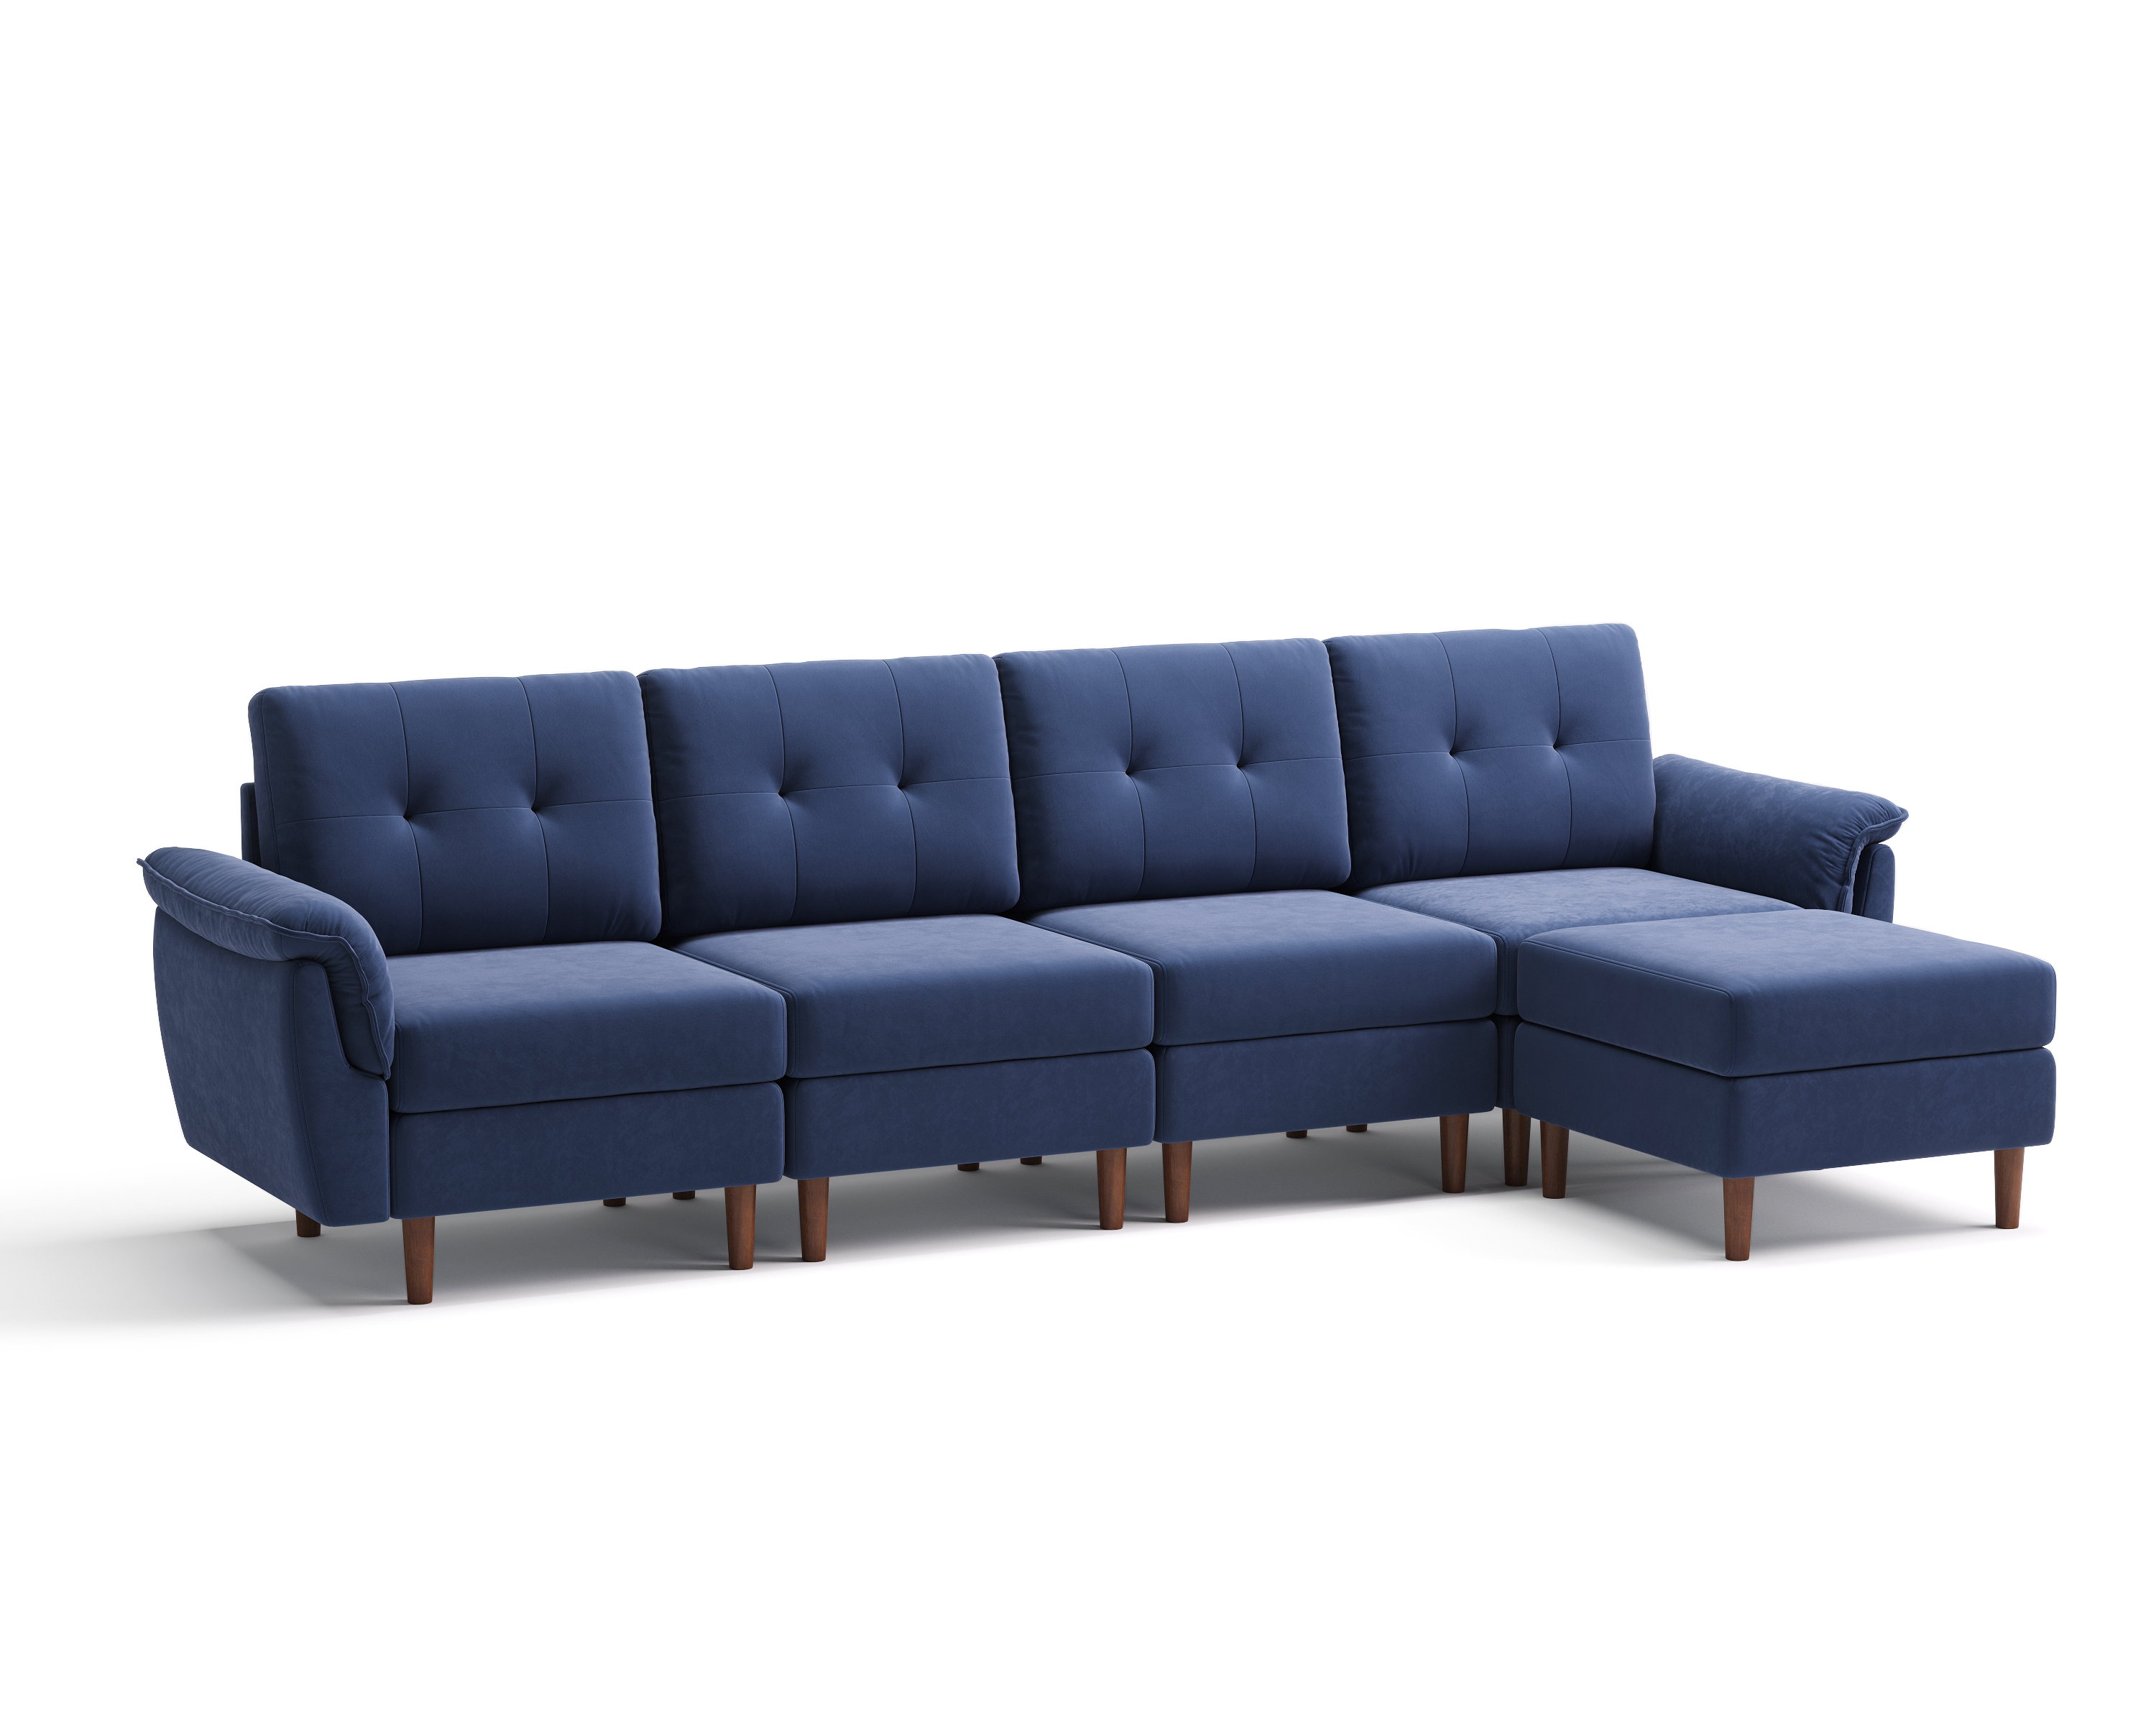 [NEW] LINSY Renee  5-Piece Sectional Modular Sofa